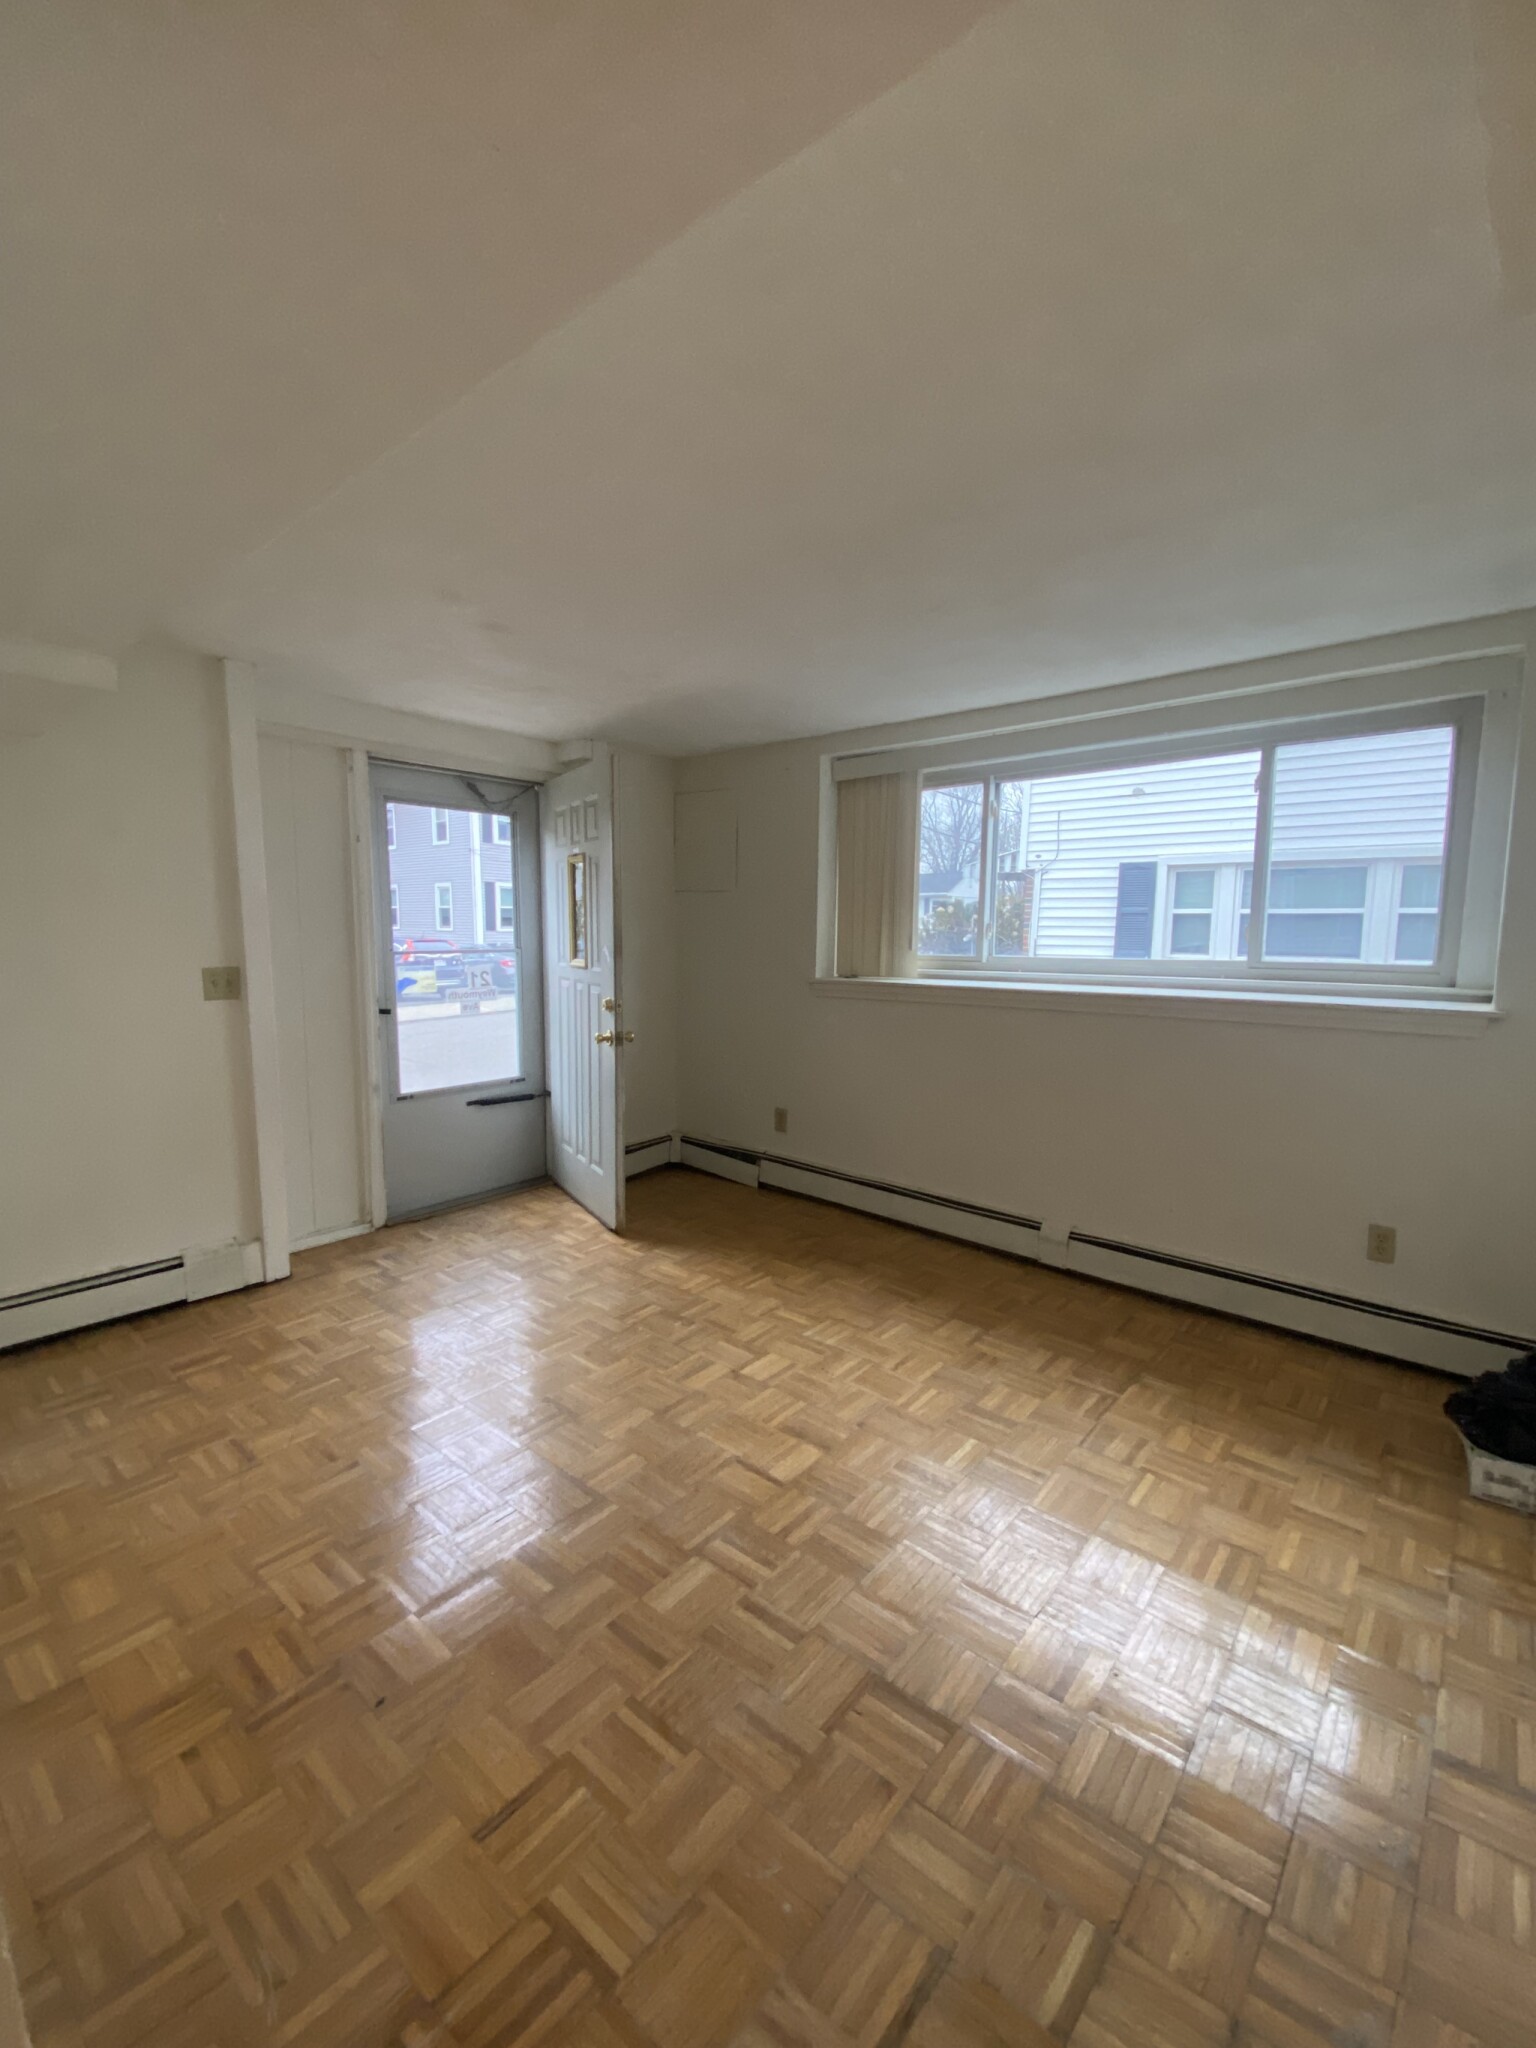 Photos of apartment on weymouth Ave.,Boston MA 02132